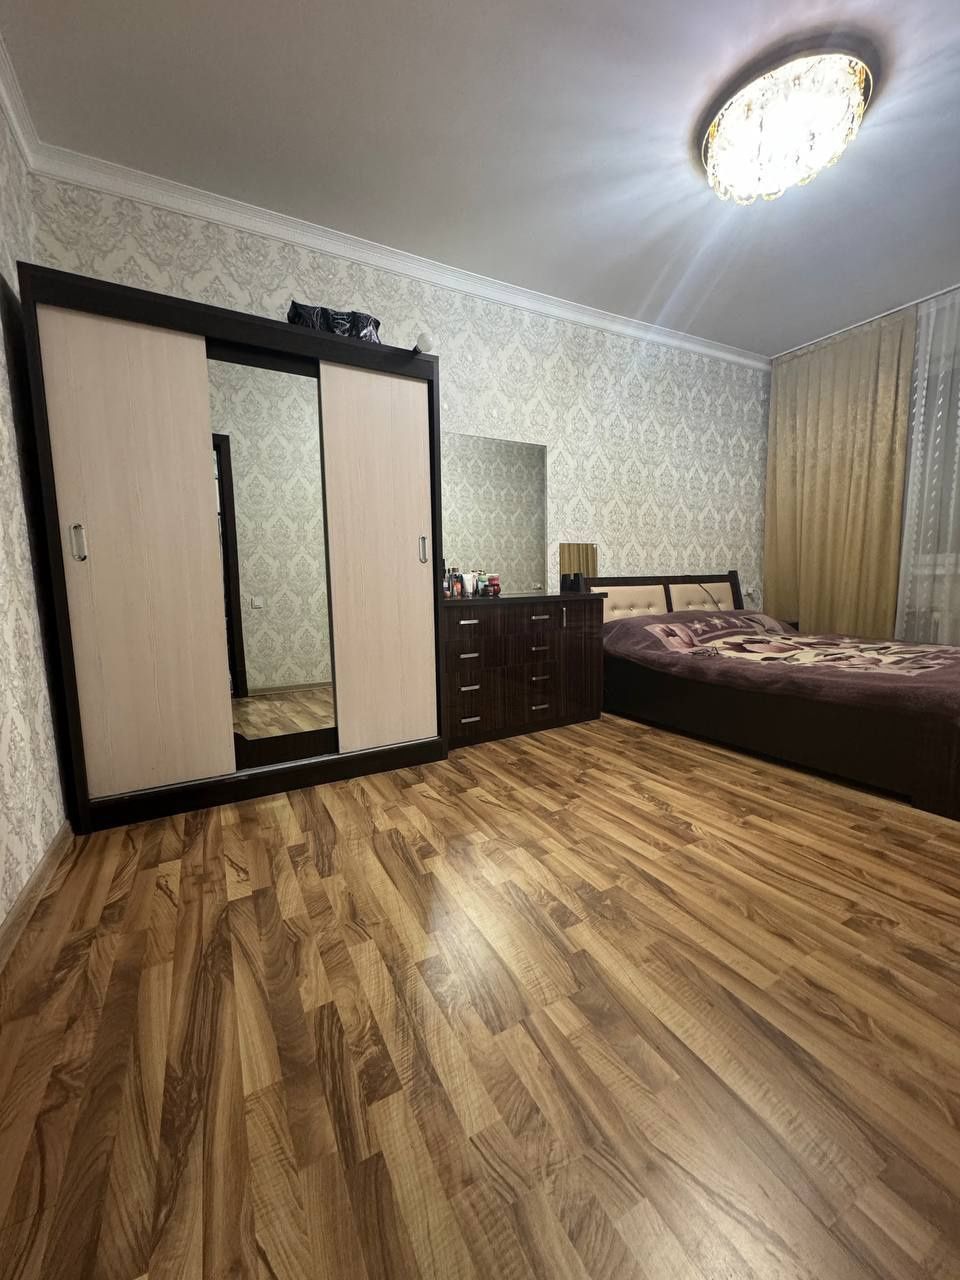 Срочно Продаётся 3-х комнатная квартира Чиланзар 11 КВ, евроремонт 65²